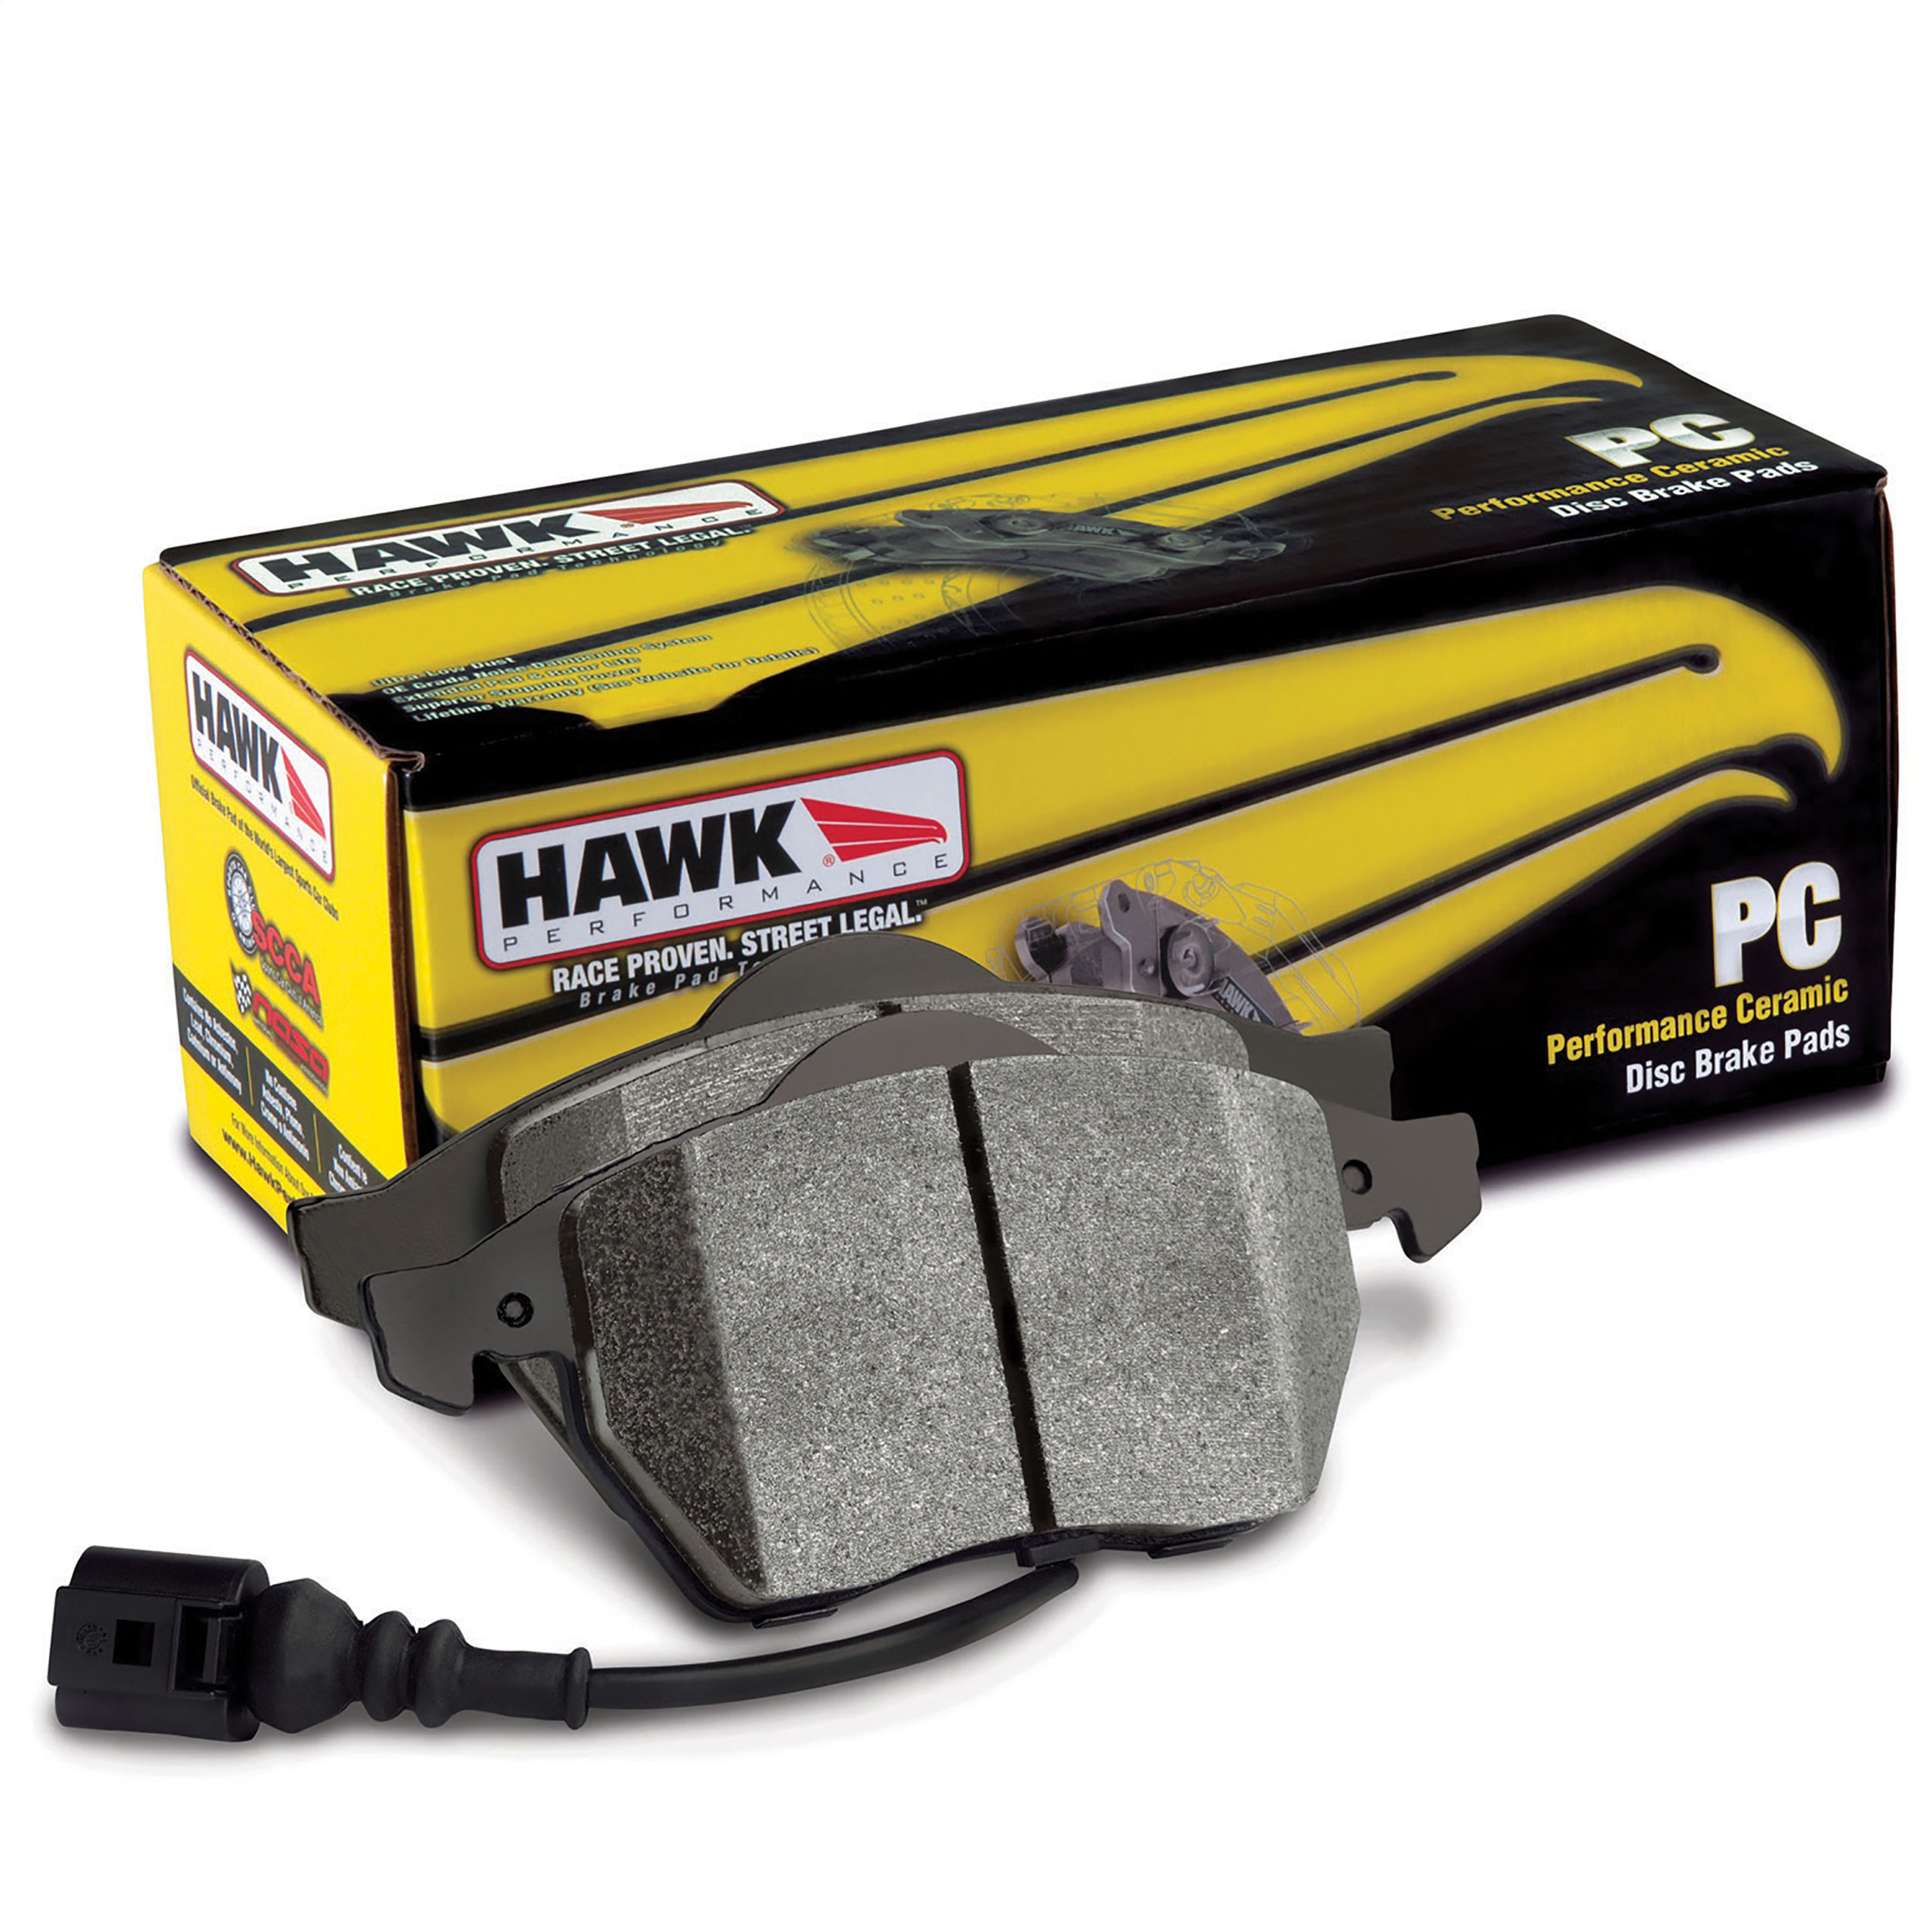 Hawk Performance 2009-2016 Chevrolet Corvette Brake Pads, Hawk PC, Rear, Z06 and ZR1 Only